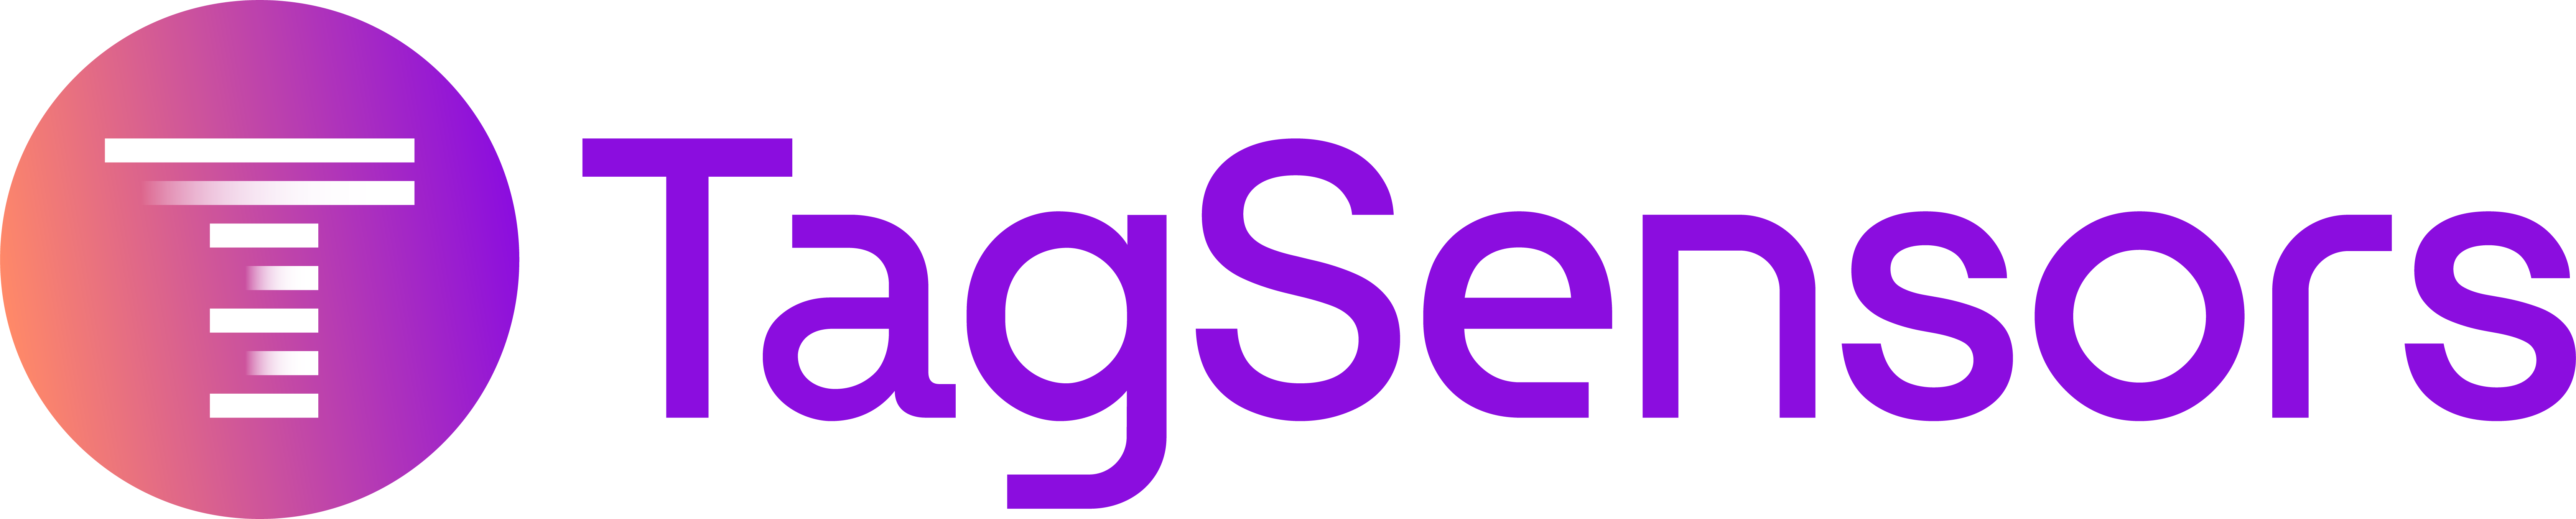 Tag Sensors AS logo